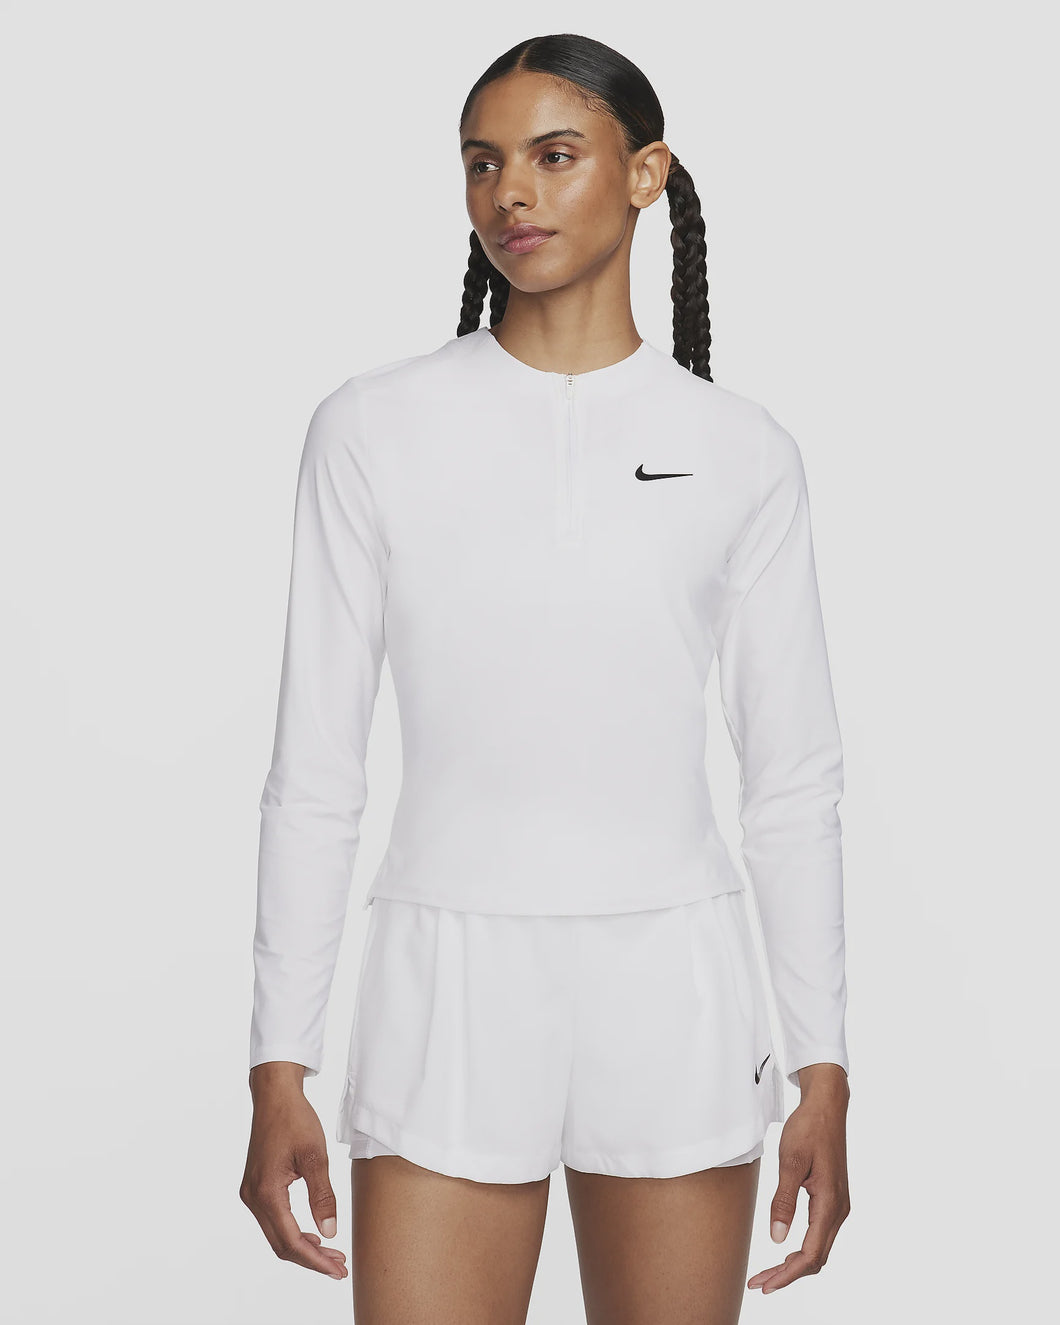 Nike Women's Dri-FIT Quarter-Zip-White